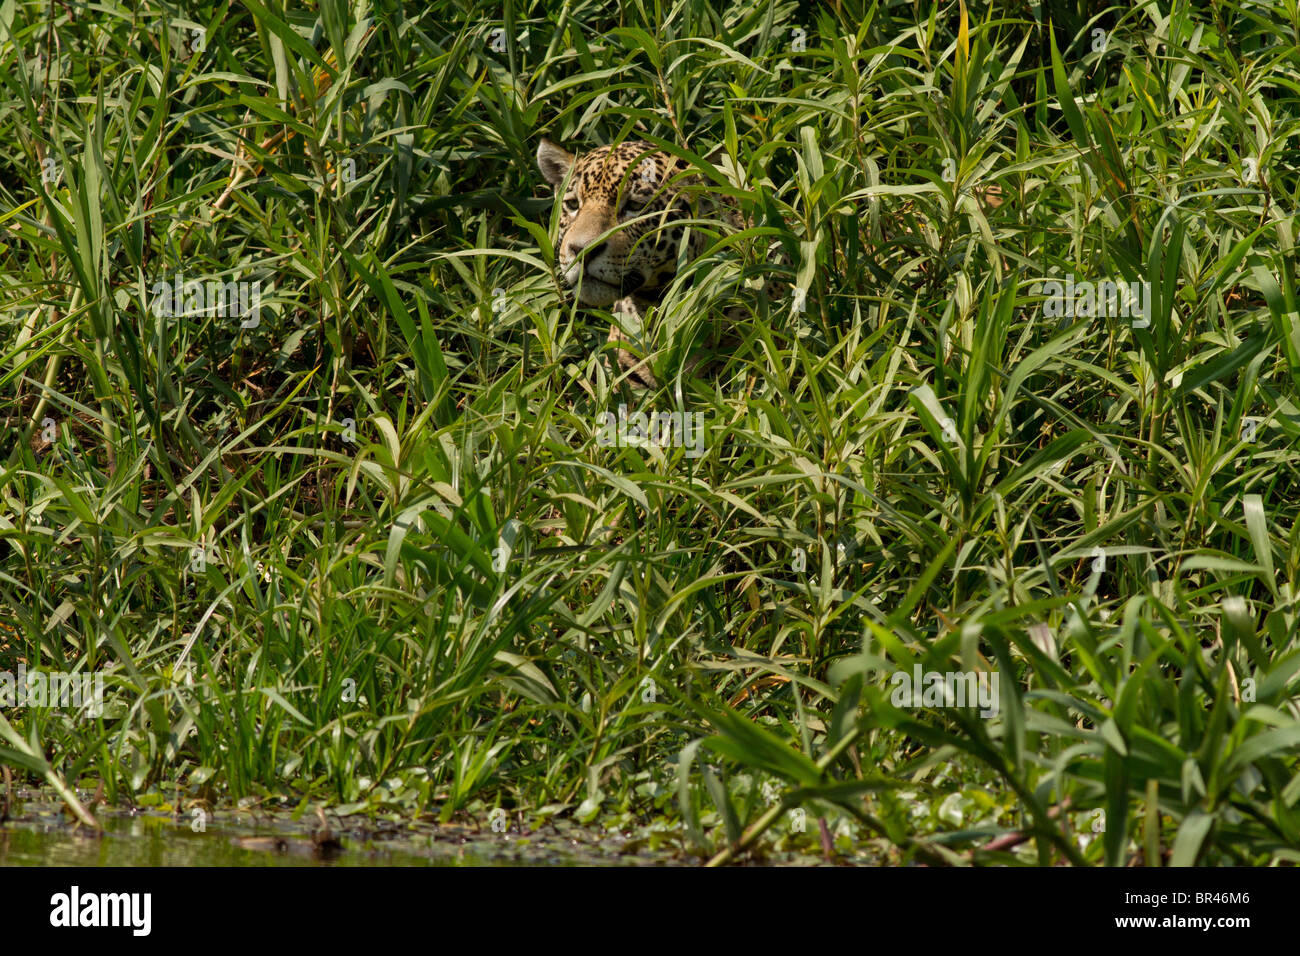 Jaguar-Jagd-Kaimane spähen durch grünen Rasen in Brasilien Pantanal Stockfoto